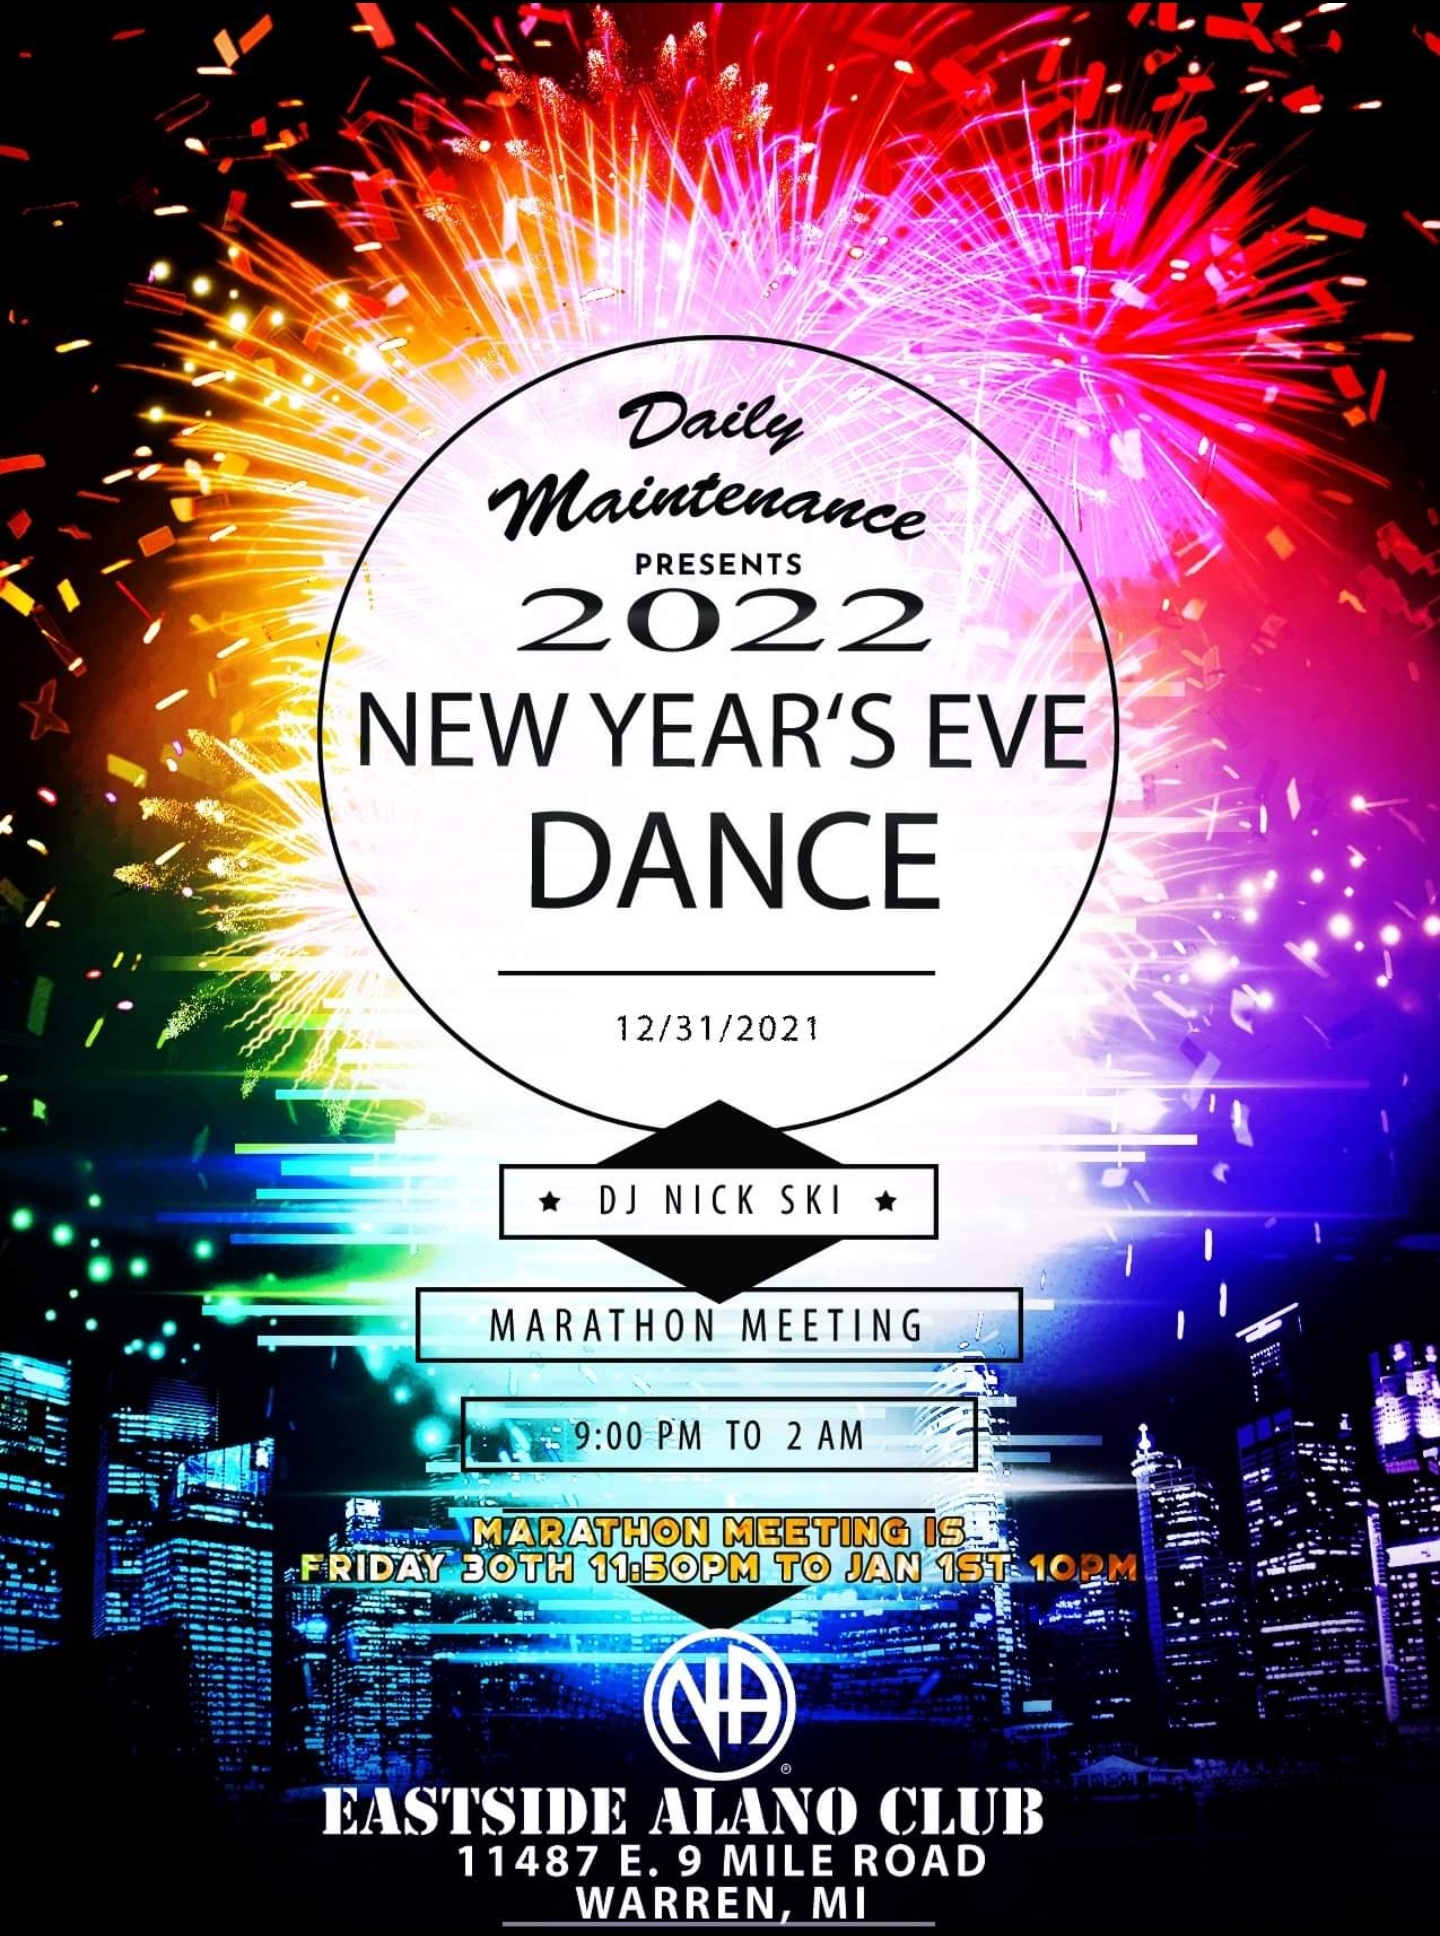 Daily Maintenance New Years Party @ Eastside Alano Club | Warren | Michigan | United States